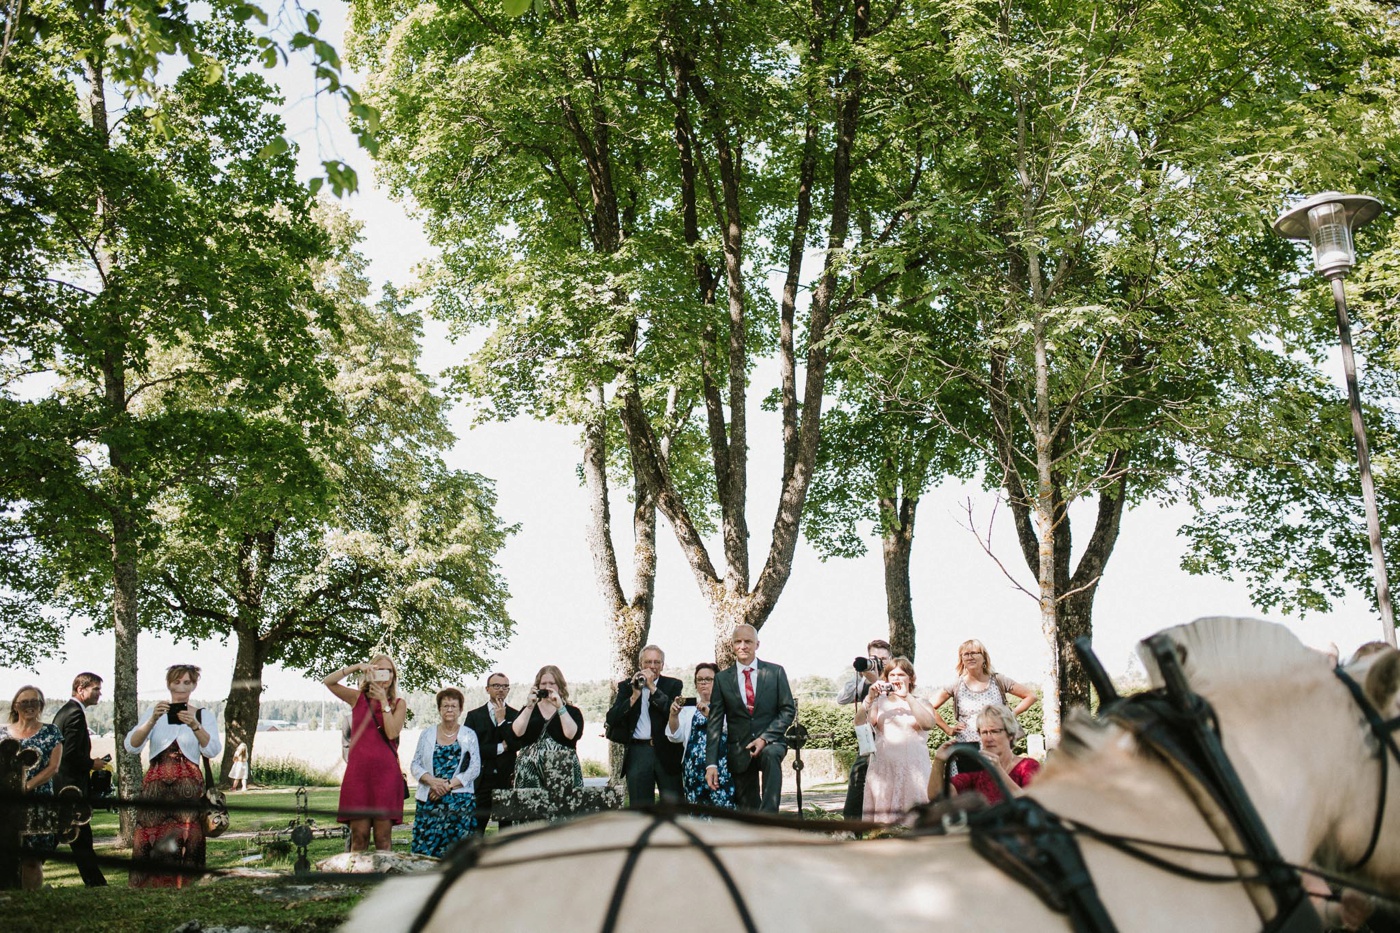 ceciliajoakim_sweden-countryside-summer-wedding_melbourne-fun-quirky-wedding-photography_30